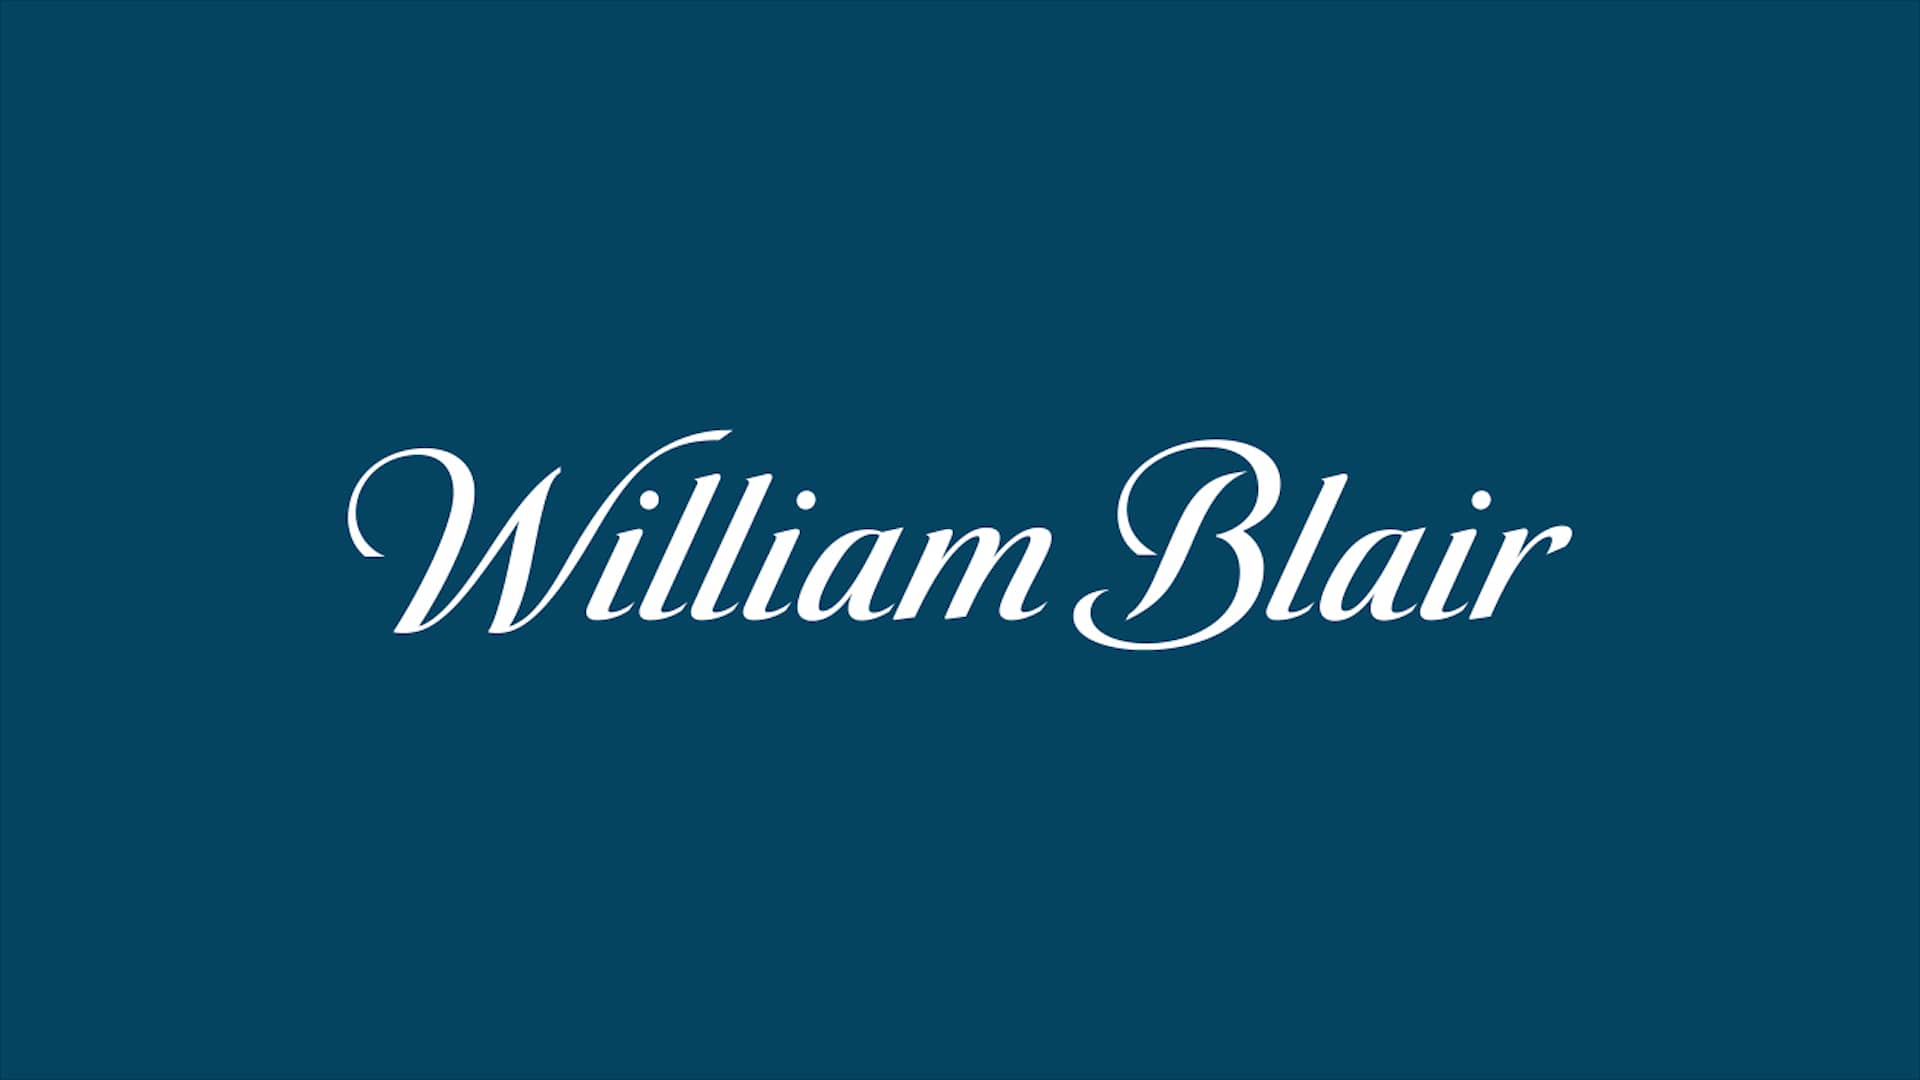 Blair Logo - William Blair logo | Gorton Community Center